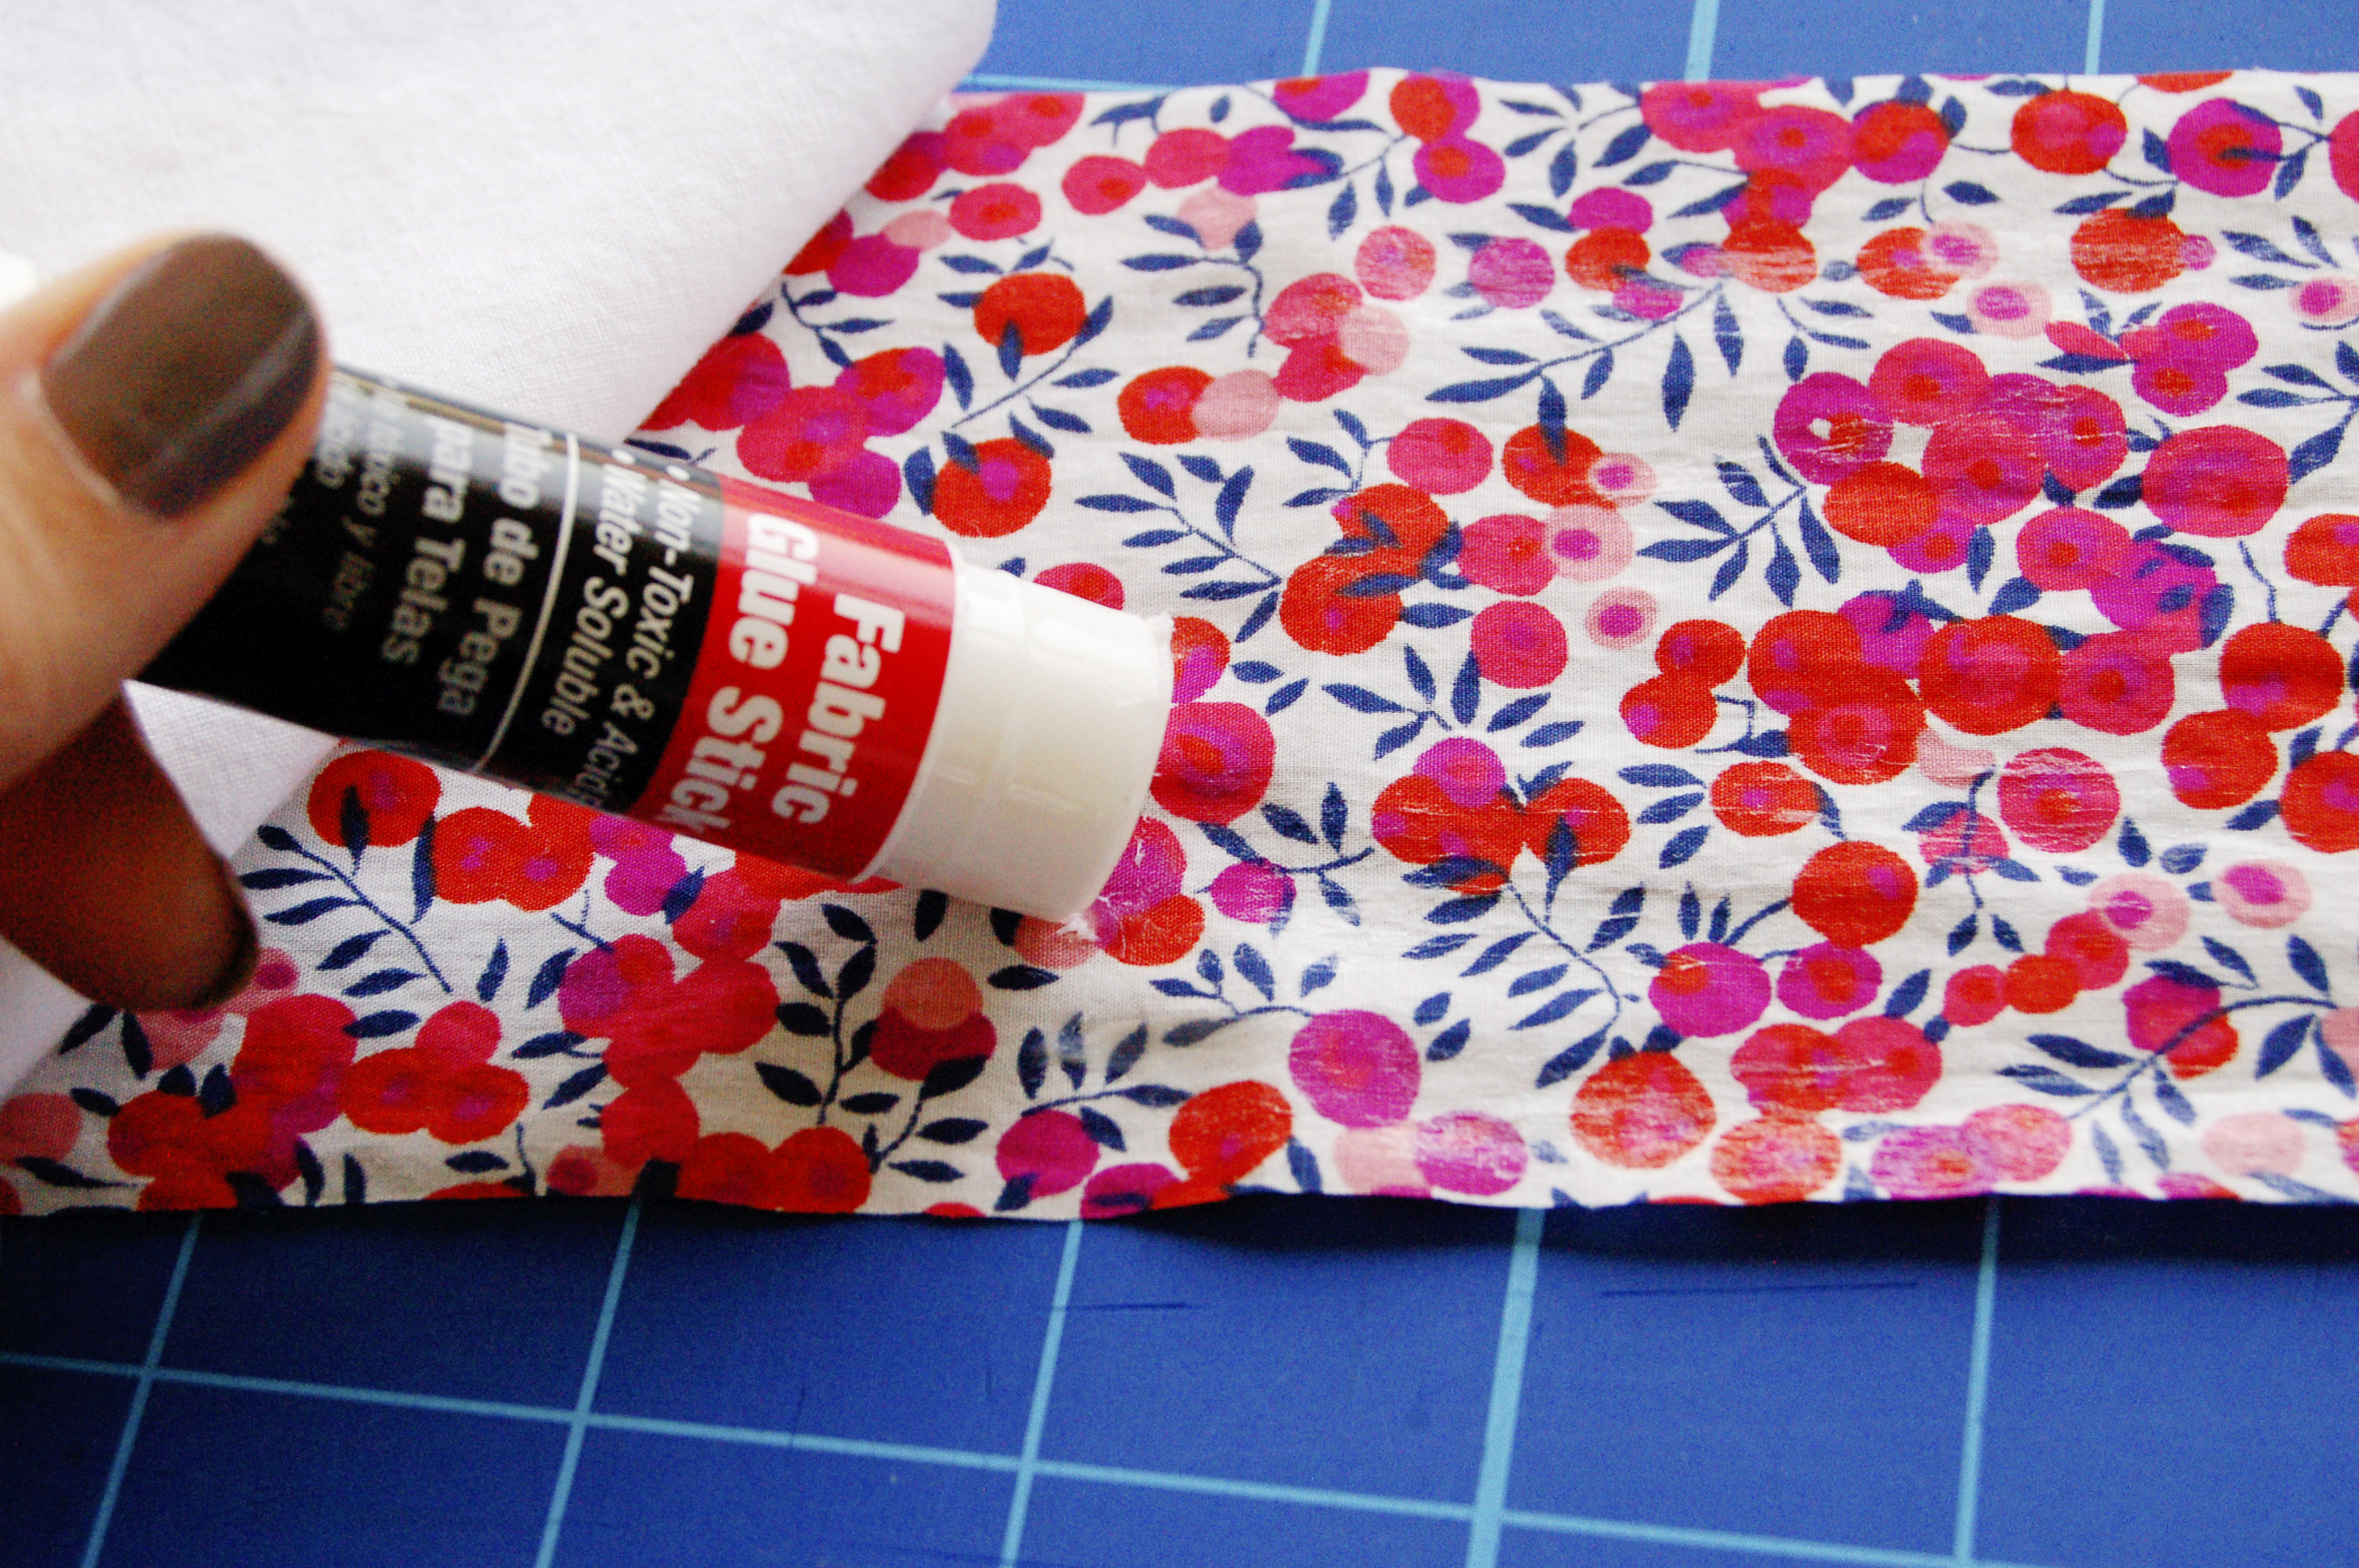 Shirtmaking: How to Glue-Baste